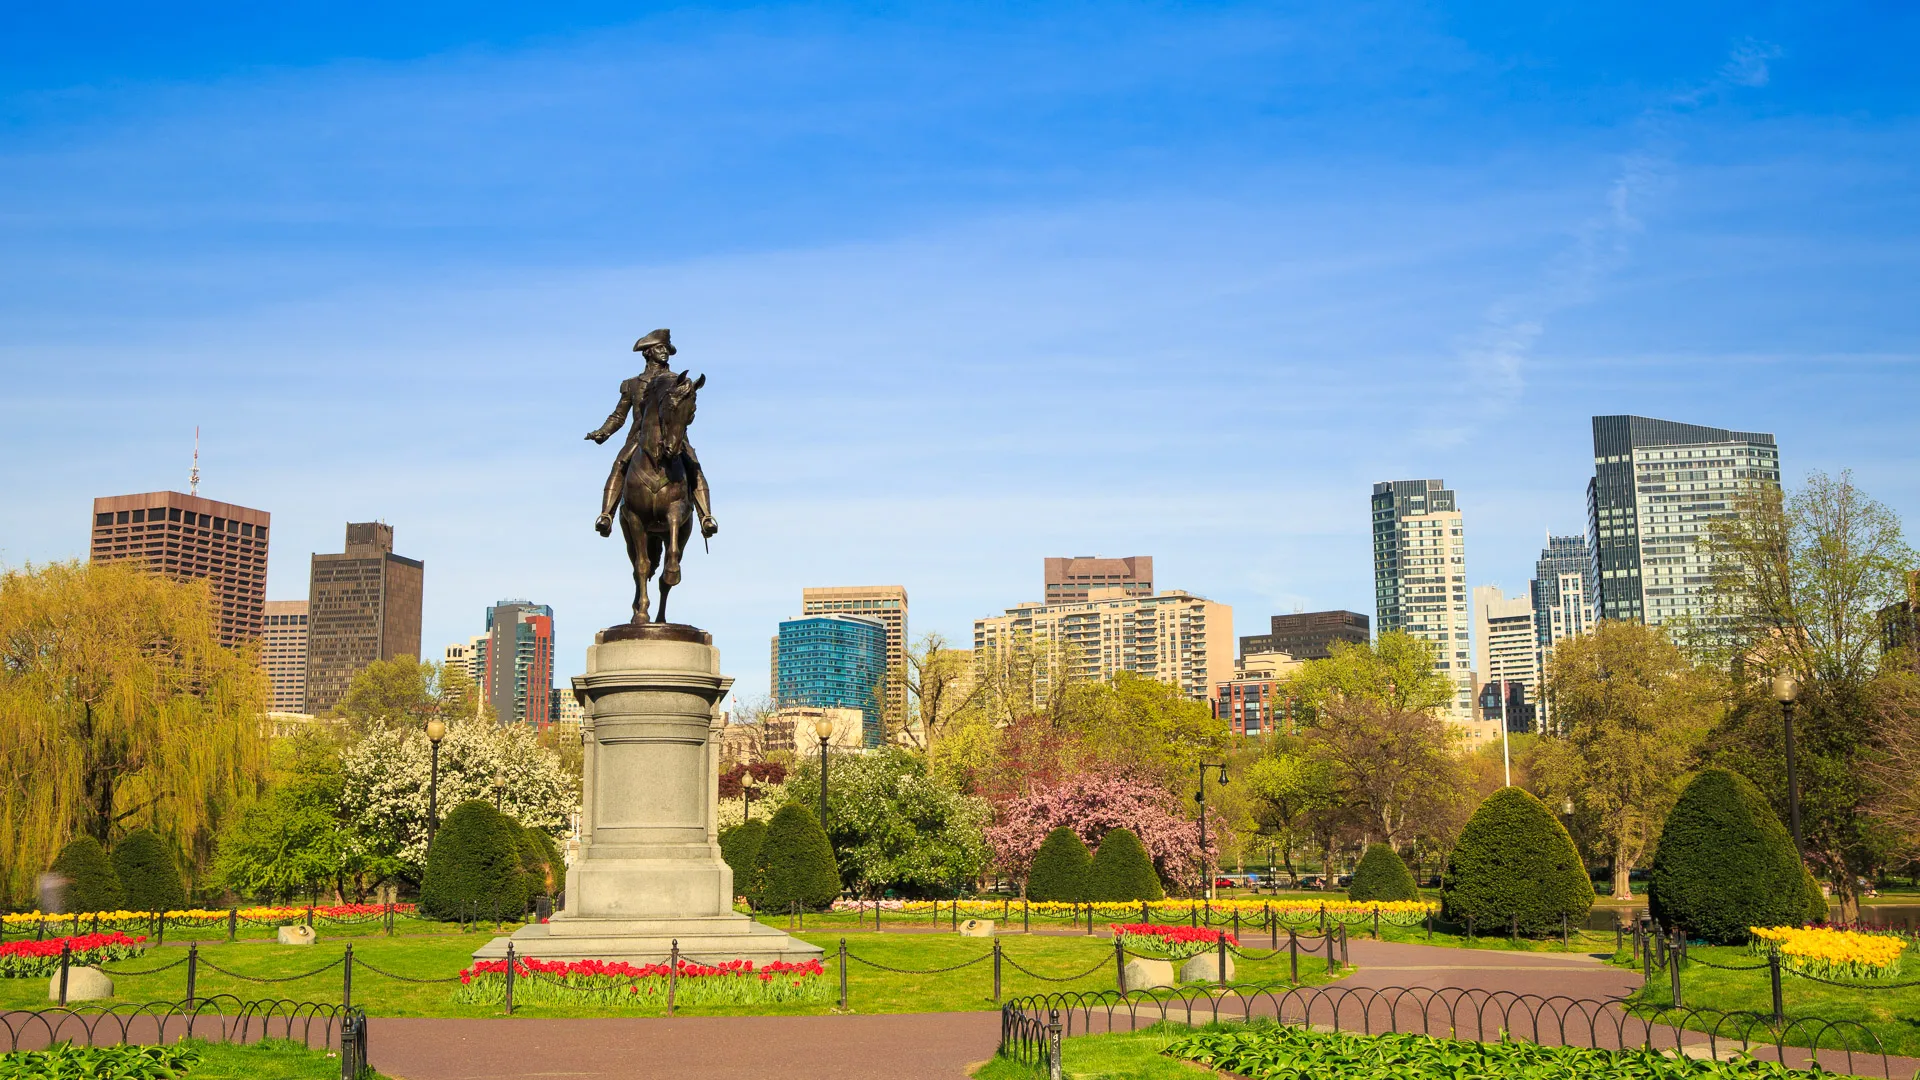 Boston Public Garden and statue of George Washington.